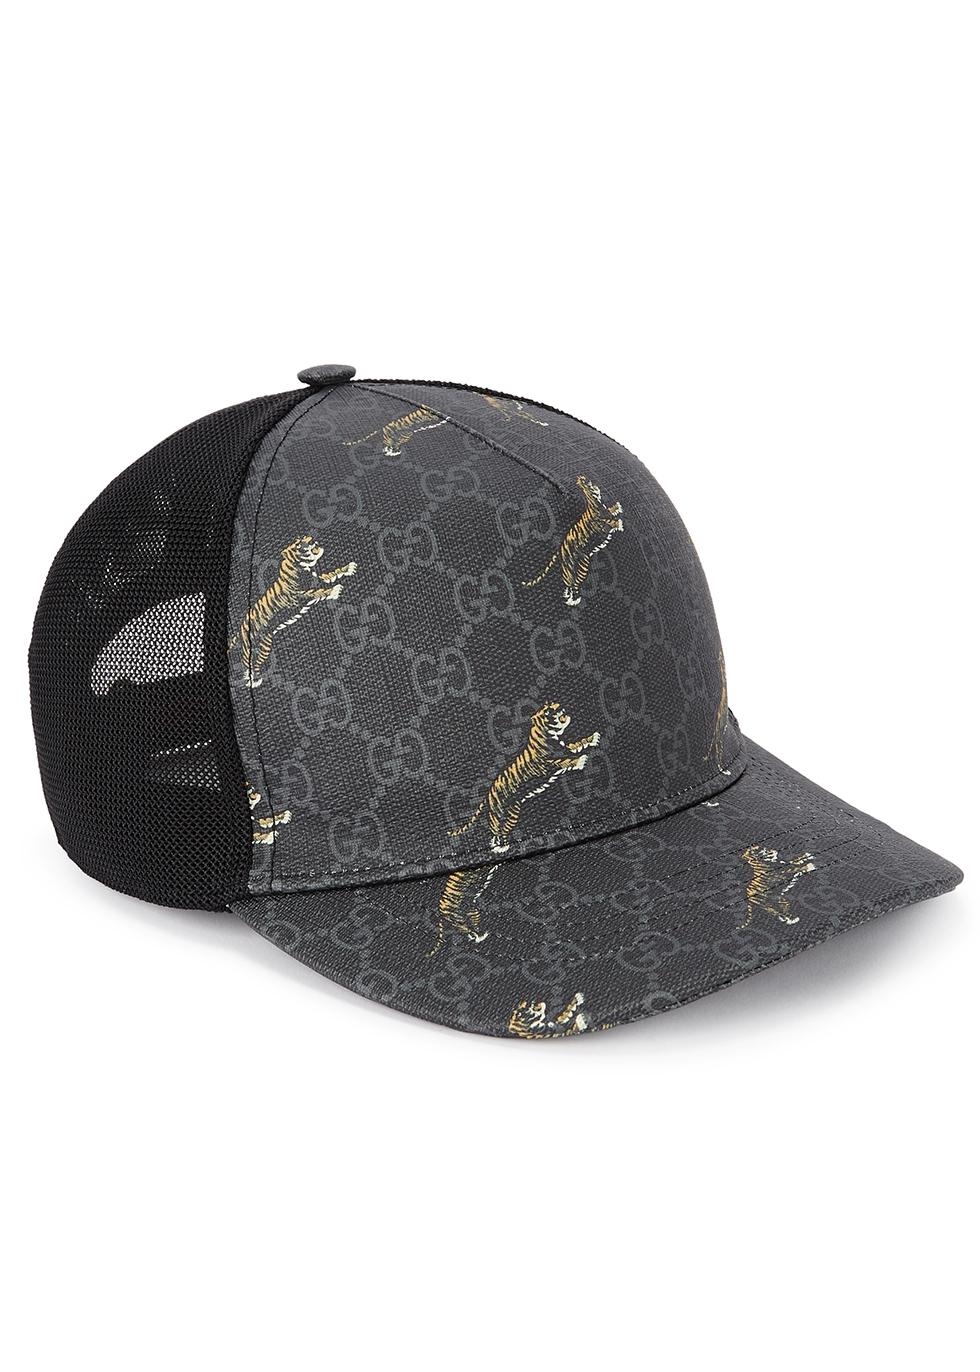 Gucci Canvas GG Supreme Tiger-print Cap in Black for Men - Lyst